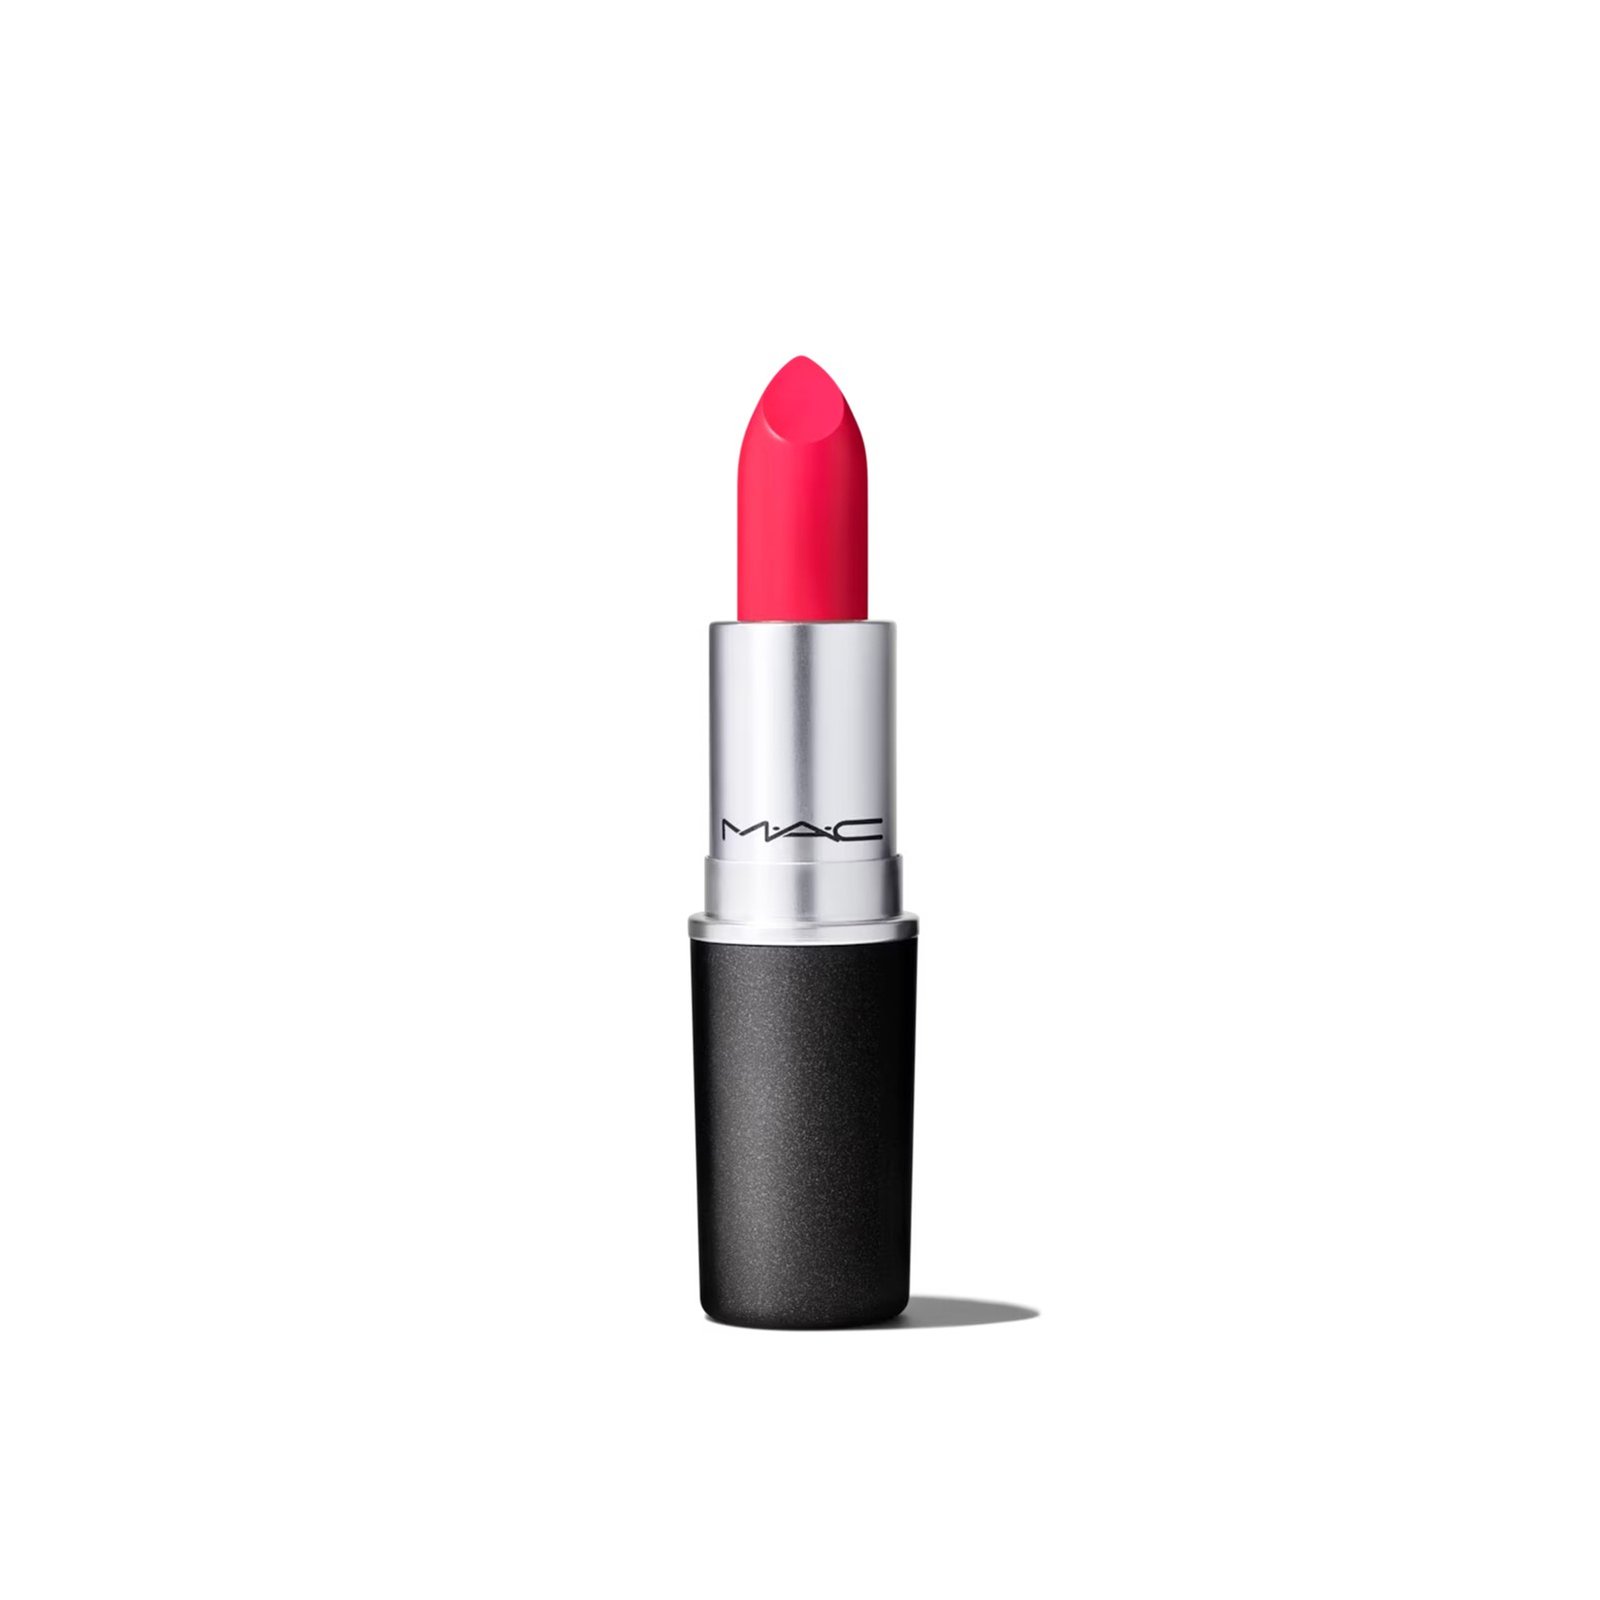 M.A.C Cosmetics Retro Matte Lipstick 706 Relentlessly Red 3g (0.10 oz)